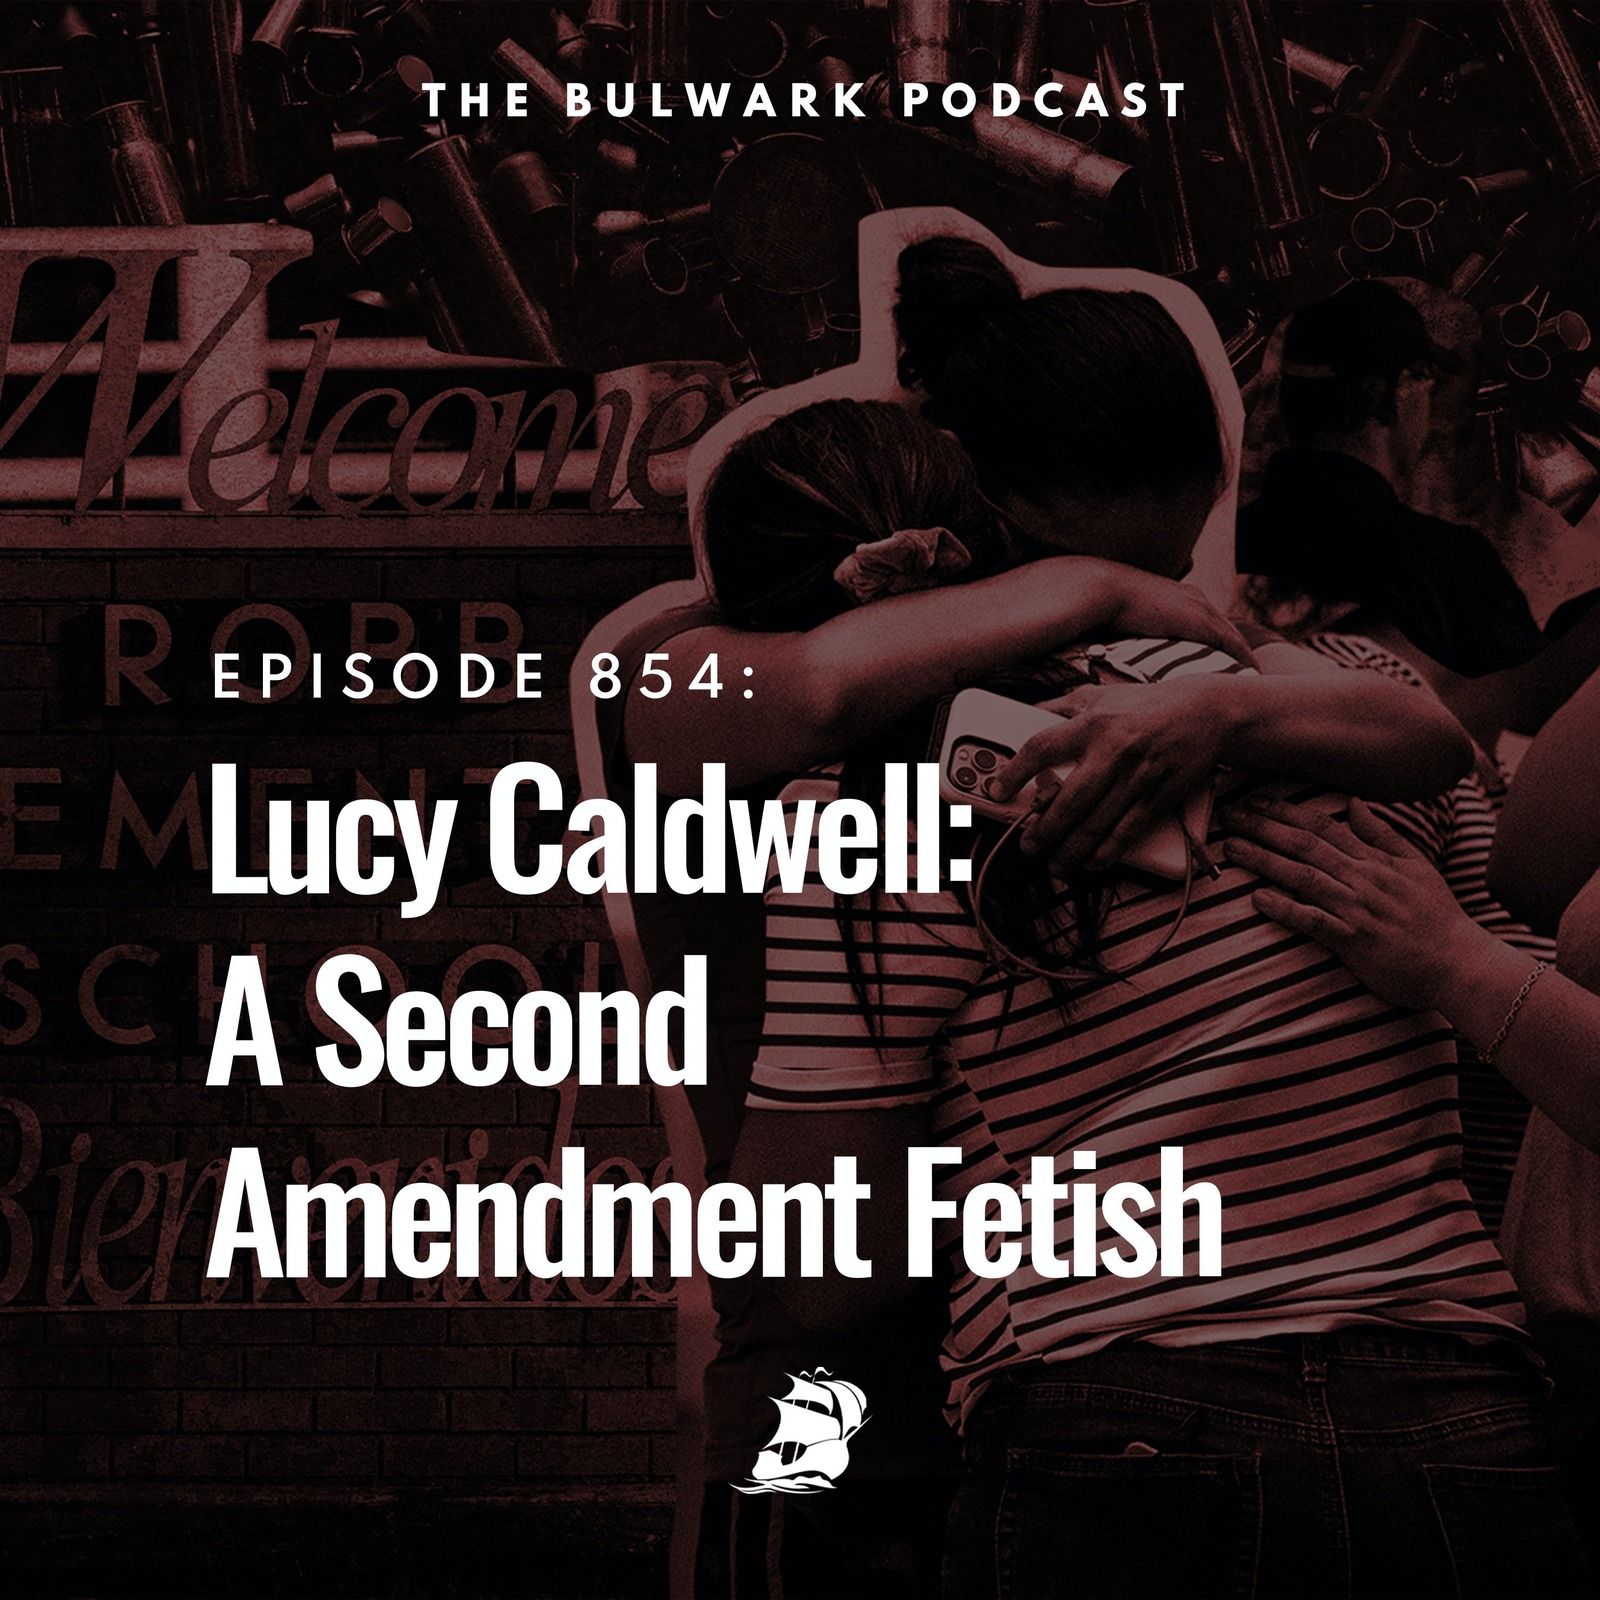 Lucy Caldwell: A Second Amendment Fetish